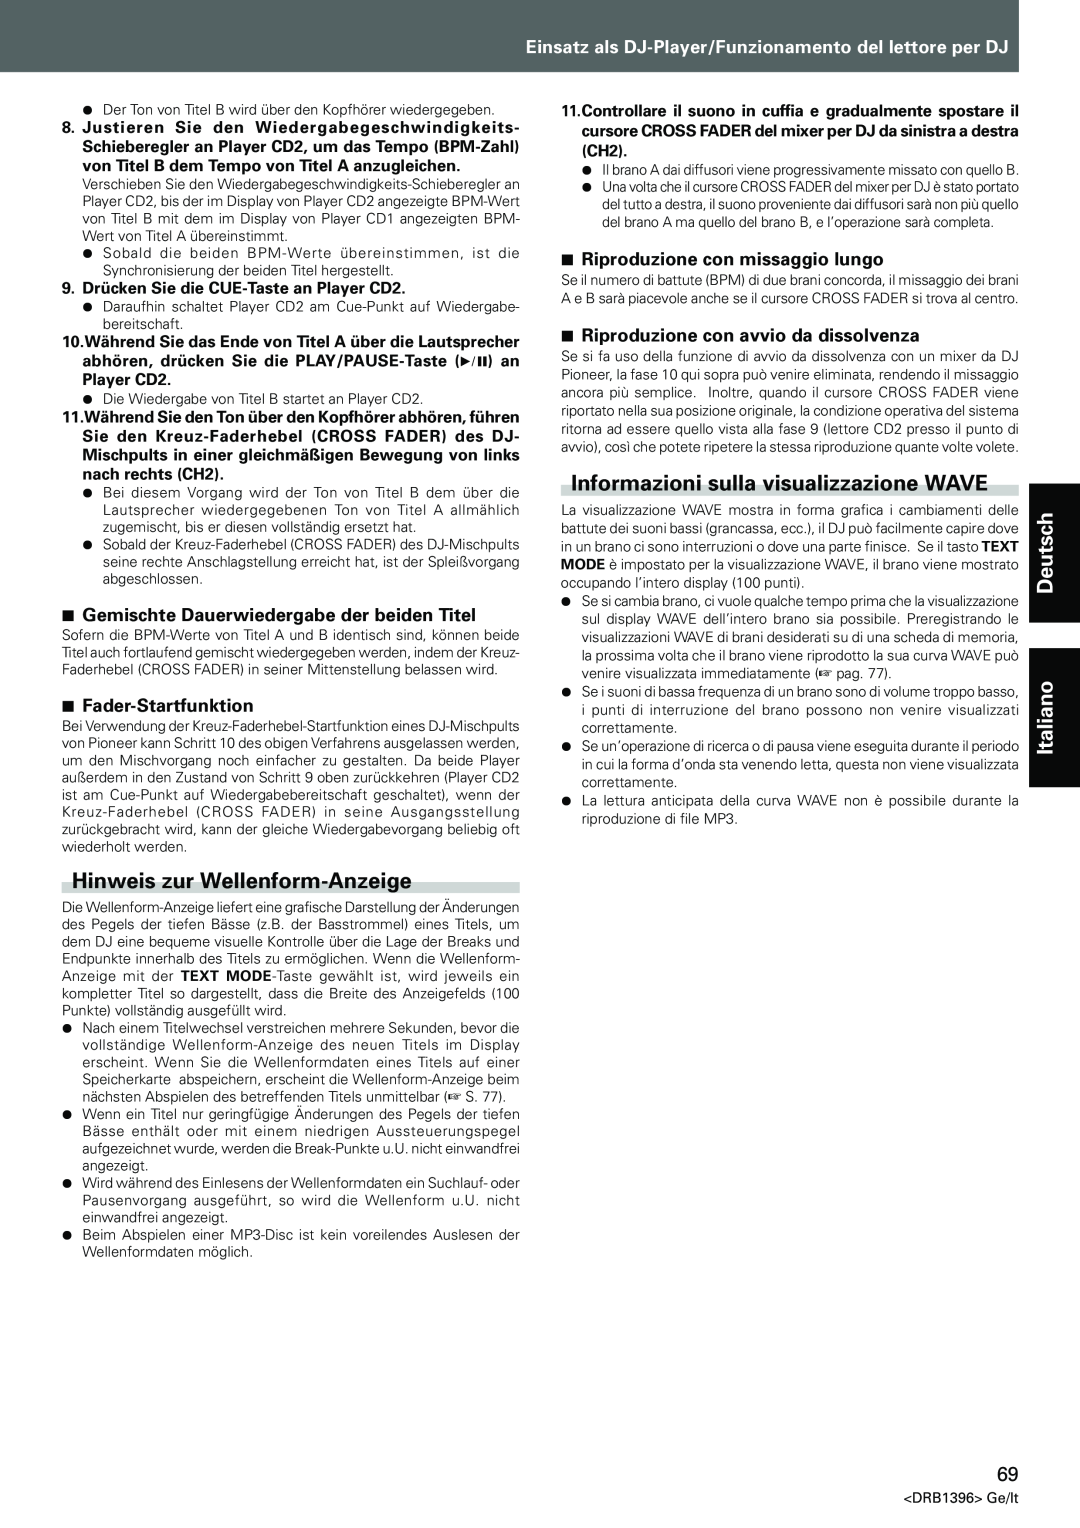 Pioneer CDJ-1000MK3 manual Hinweis zur Wellenform-Anzeige, Informazioni sulla visualizzazione WAVE, 7Fader-Startfunktion 